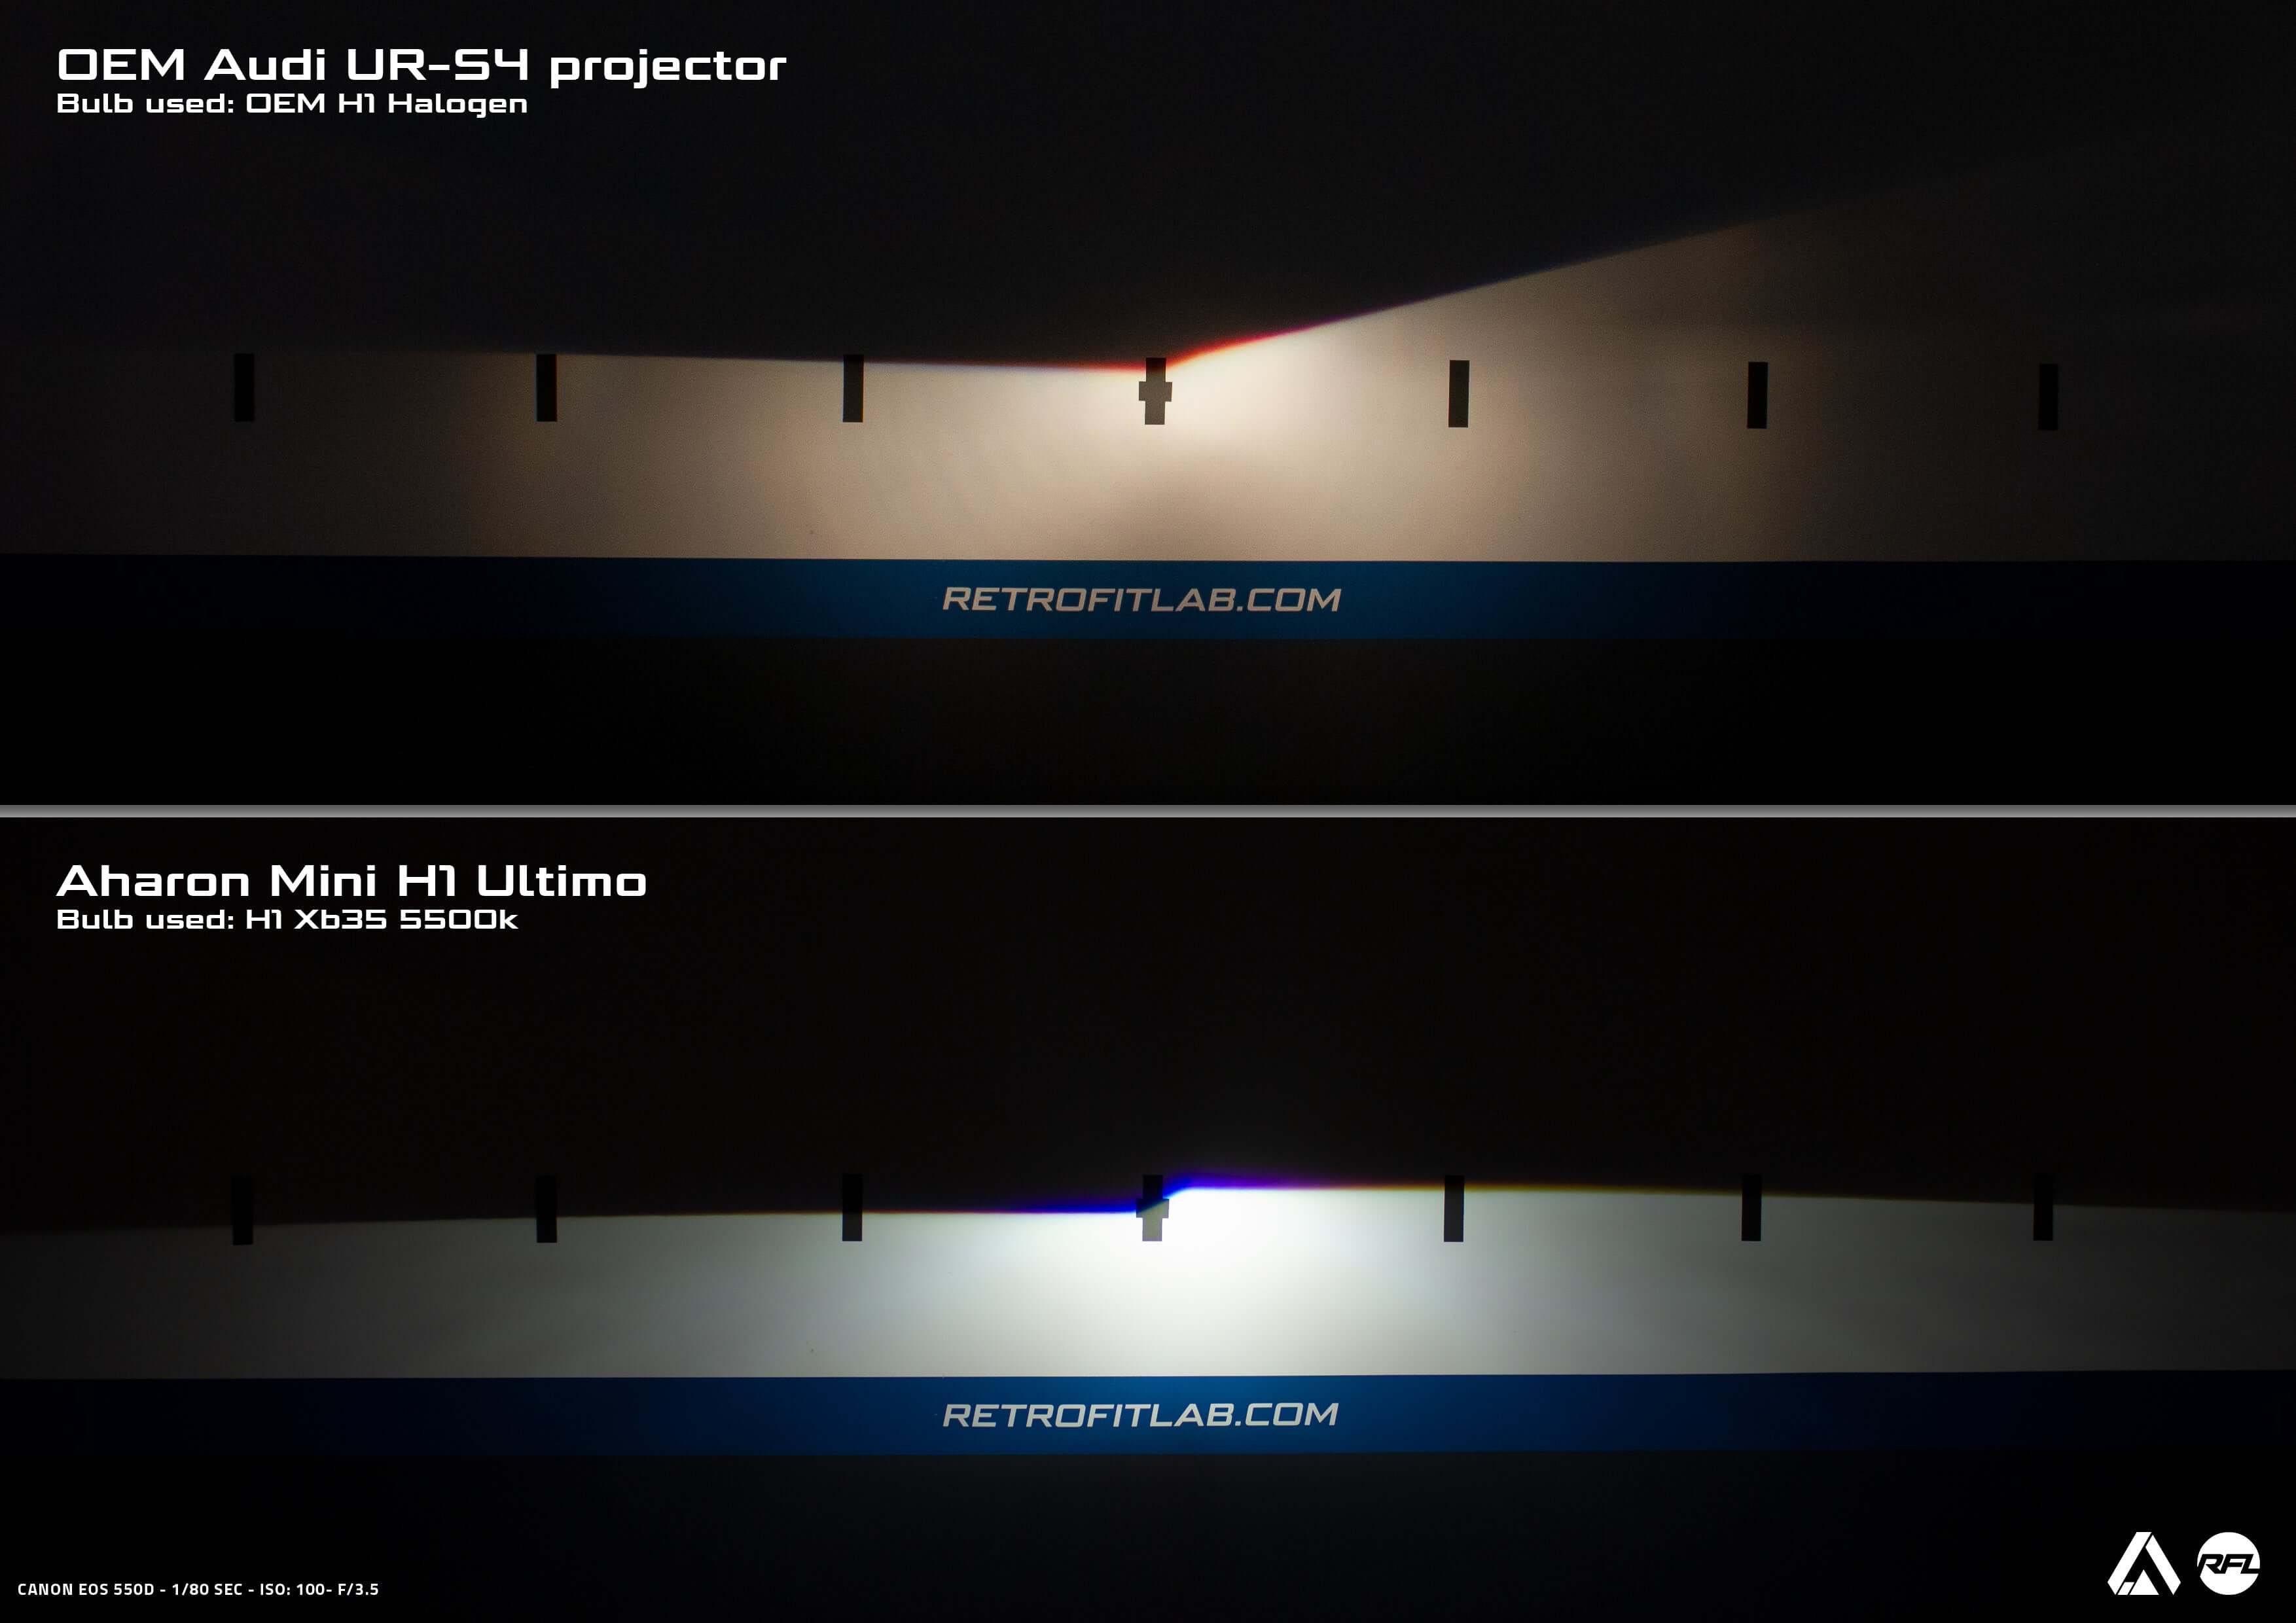 Audi Ur-S4 91-94 bi-xenon headlight upgrade kit for halogen projector